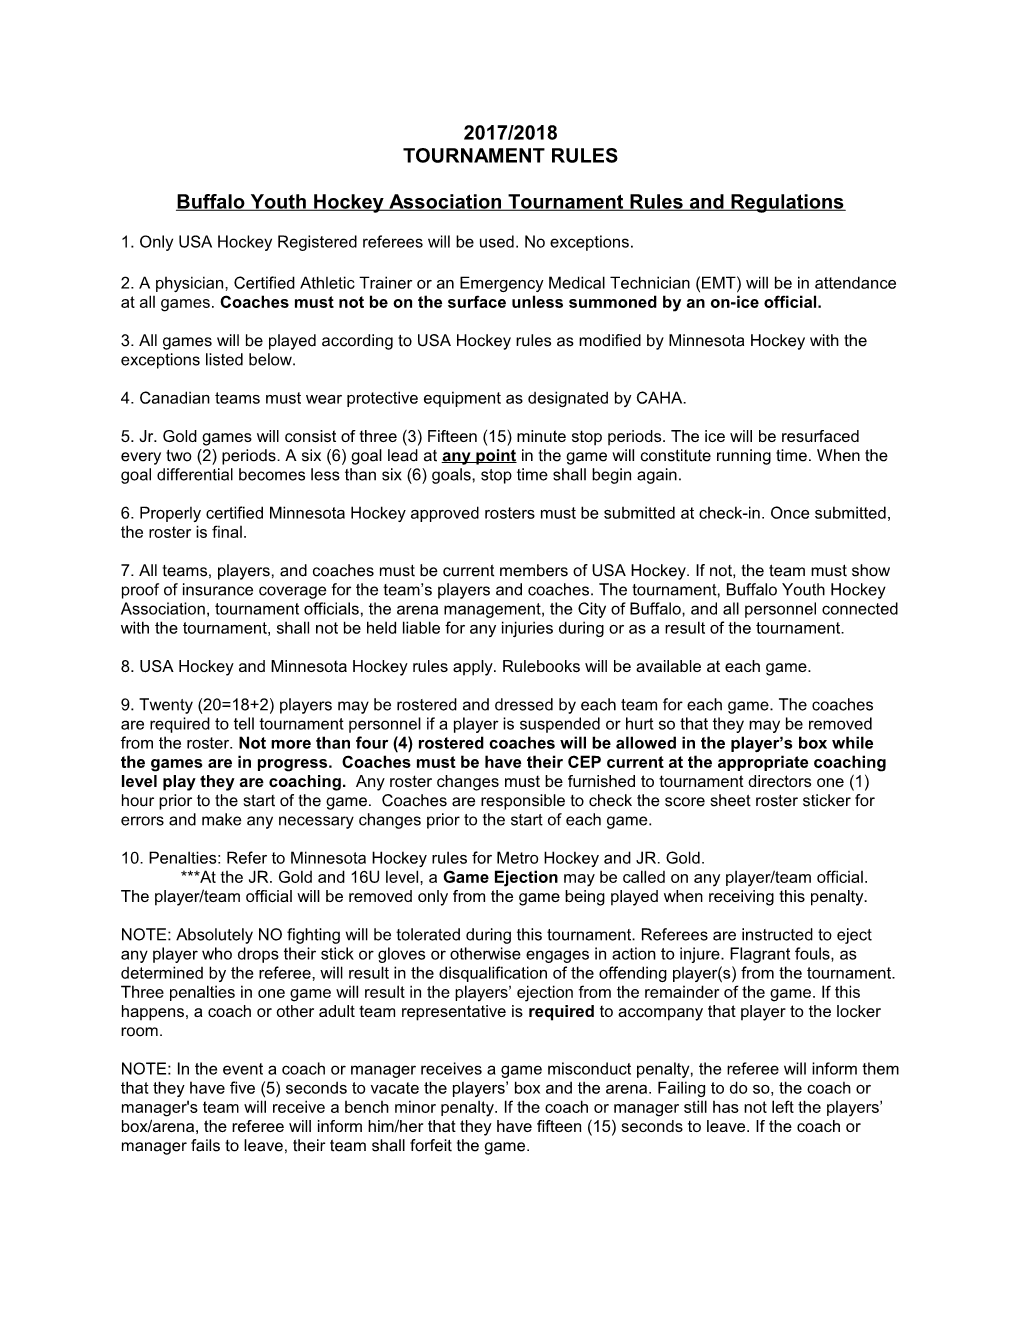 Buffalo Youth Hockey Association Tournament Rules and Regulations